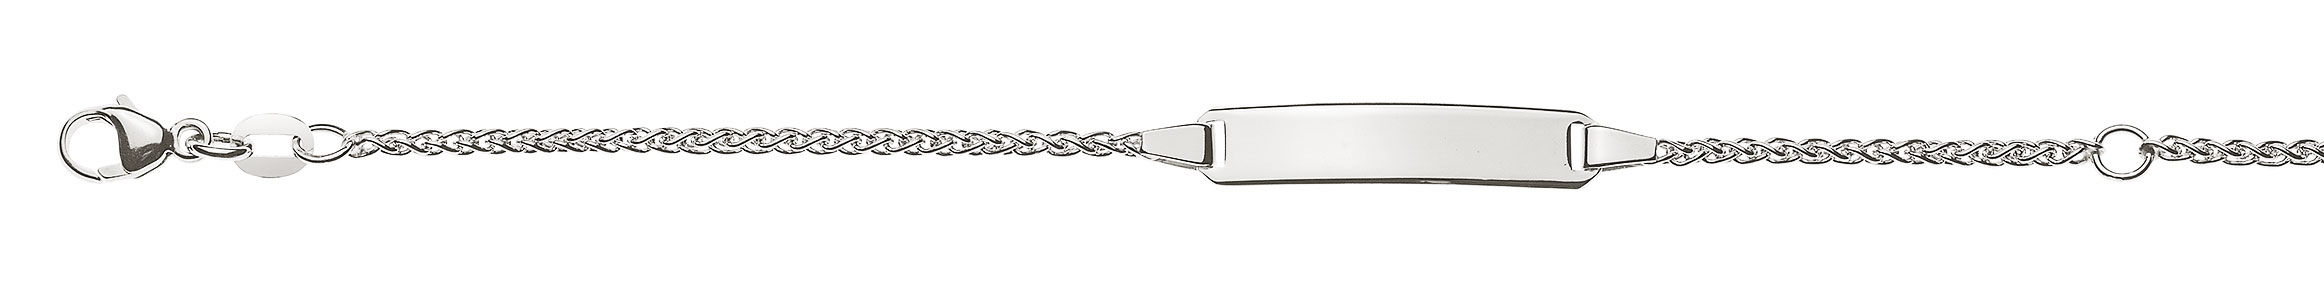 AURONOS Prestige ID-Bracelet 18k Weissgold Zopfkette 14cm